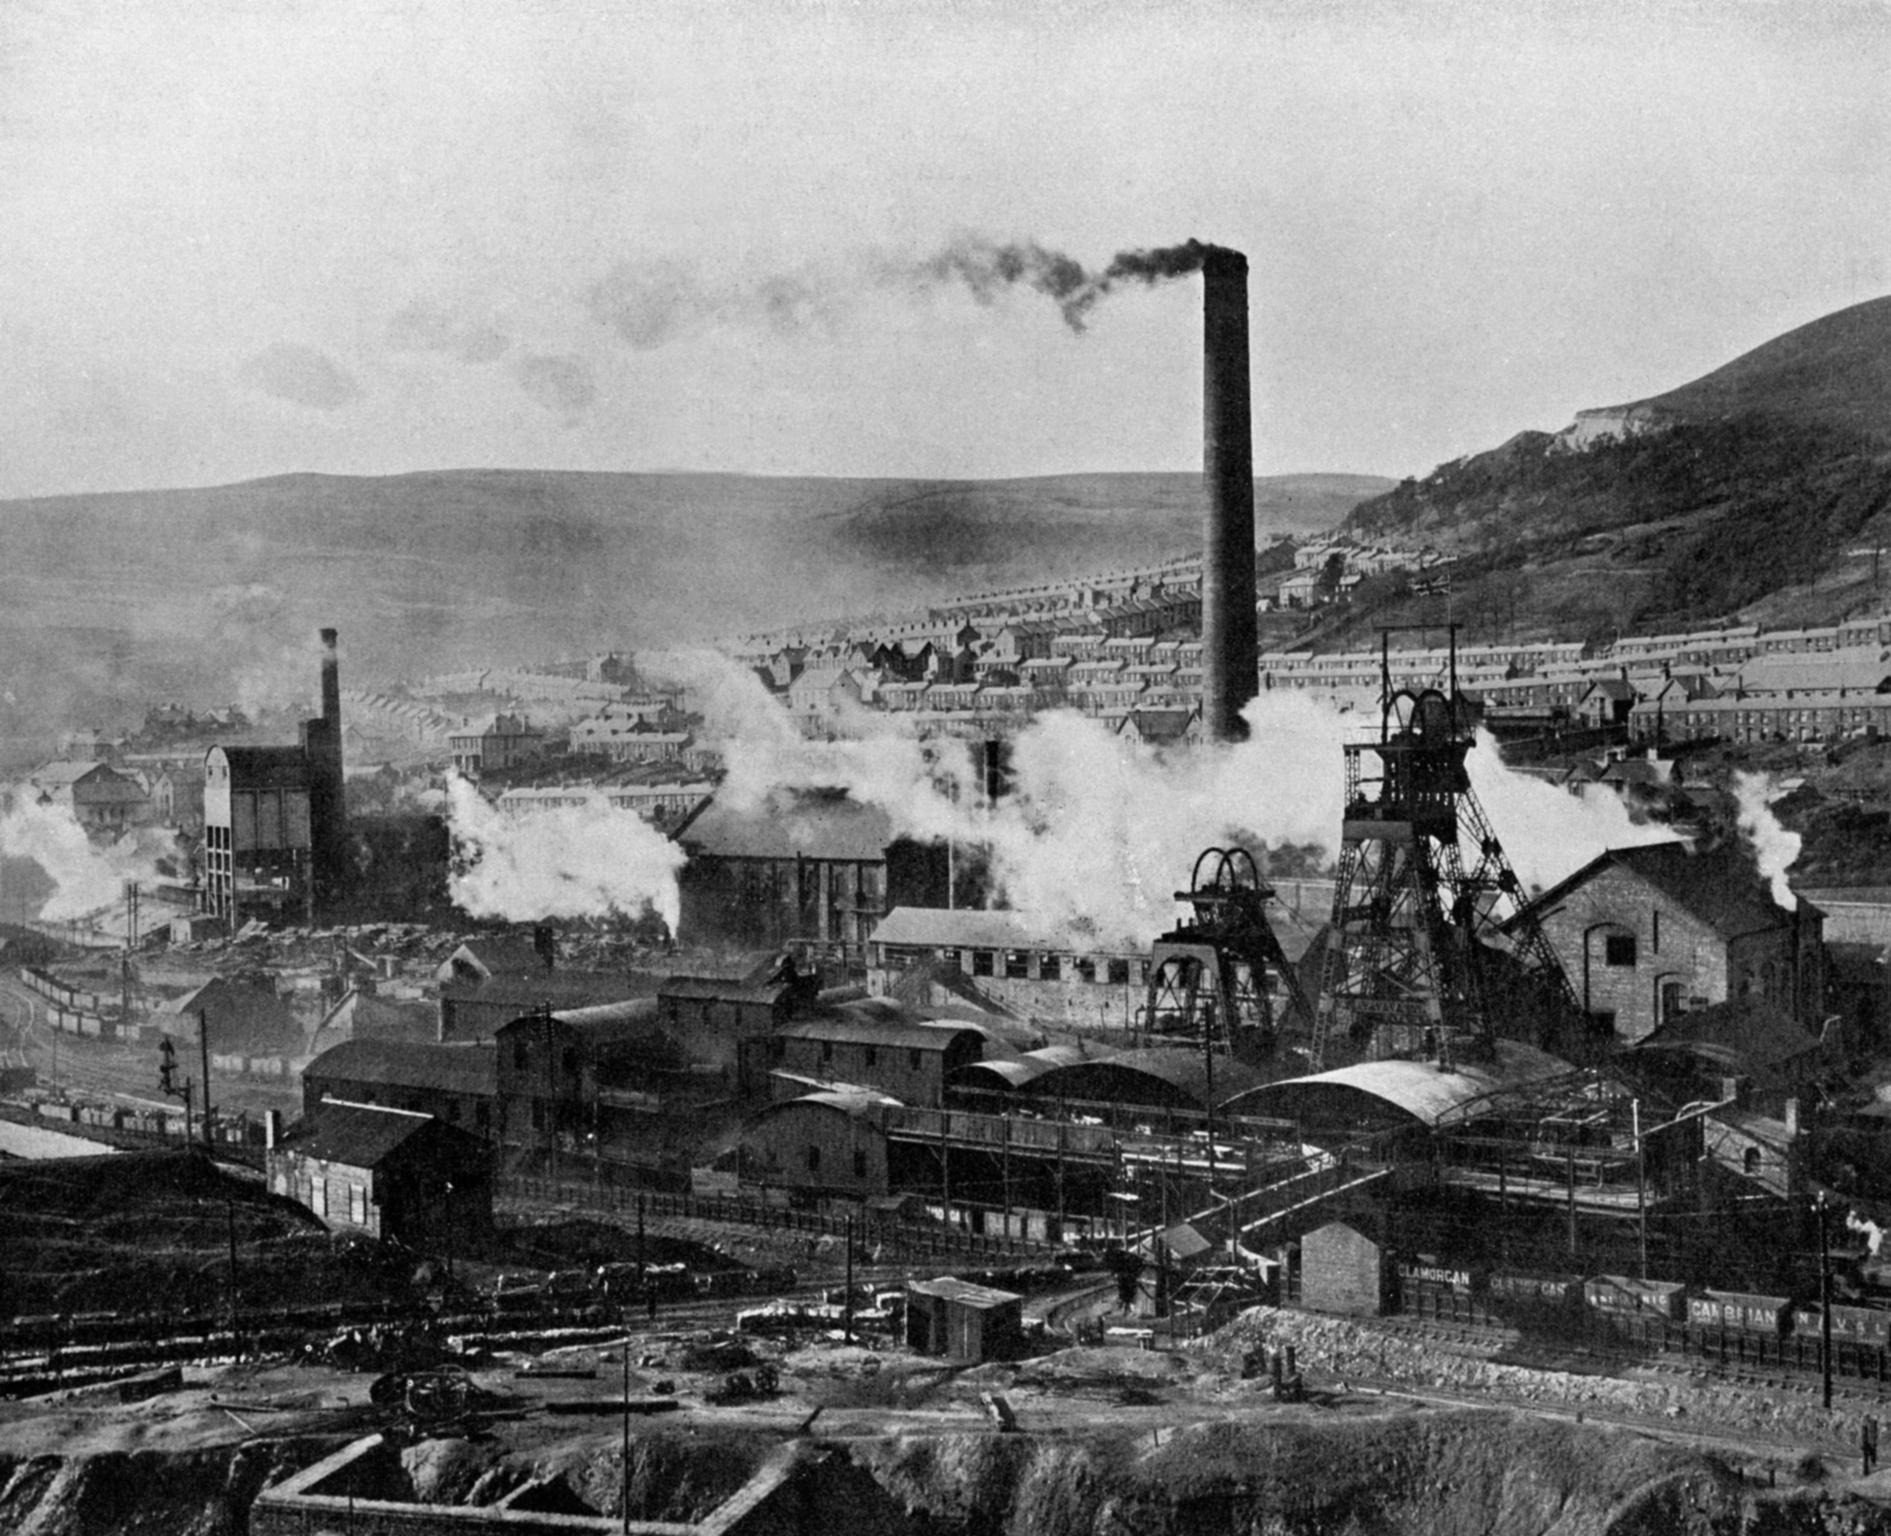 Glamorgan Colliery, photograph